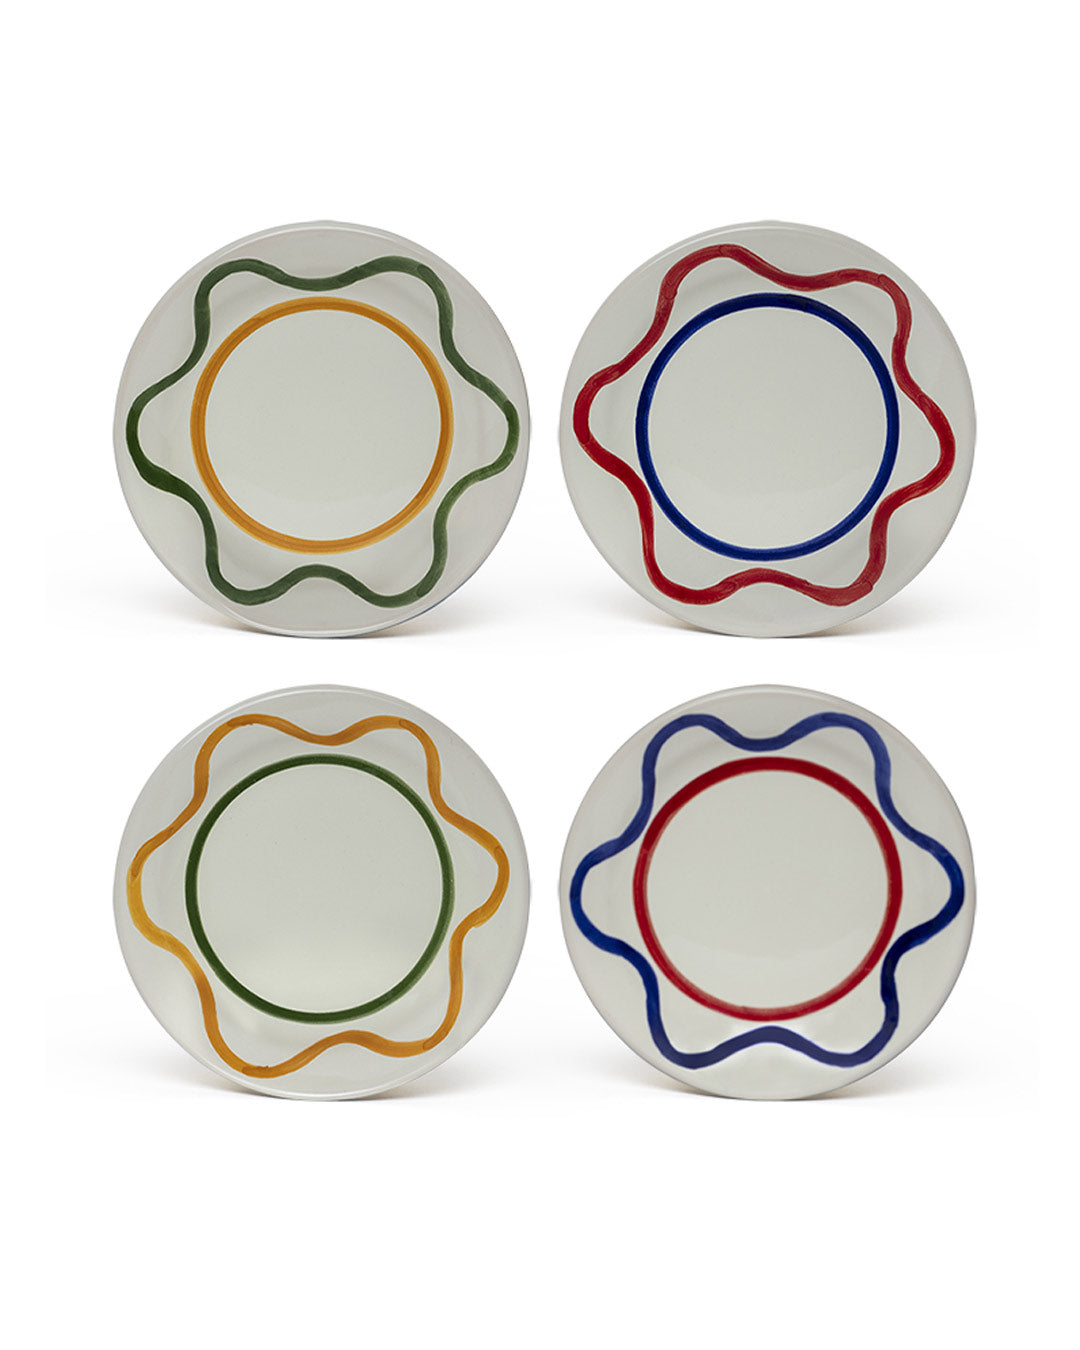 Wavy-Lines Bread Plates - coasters MIX - Set of 4